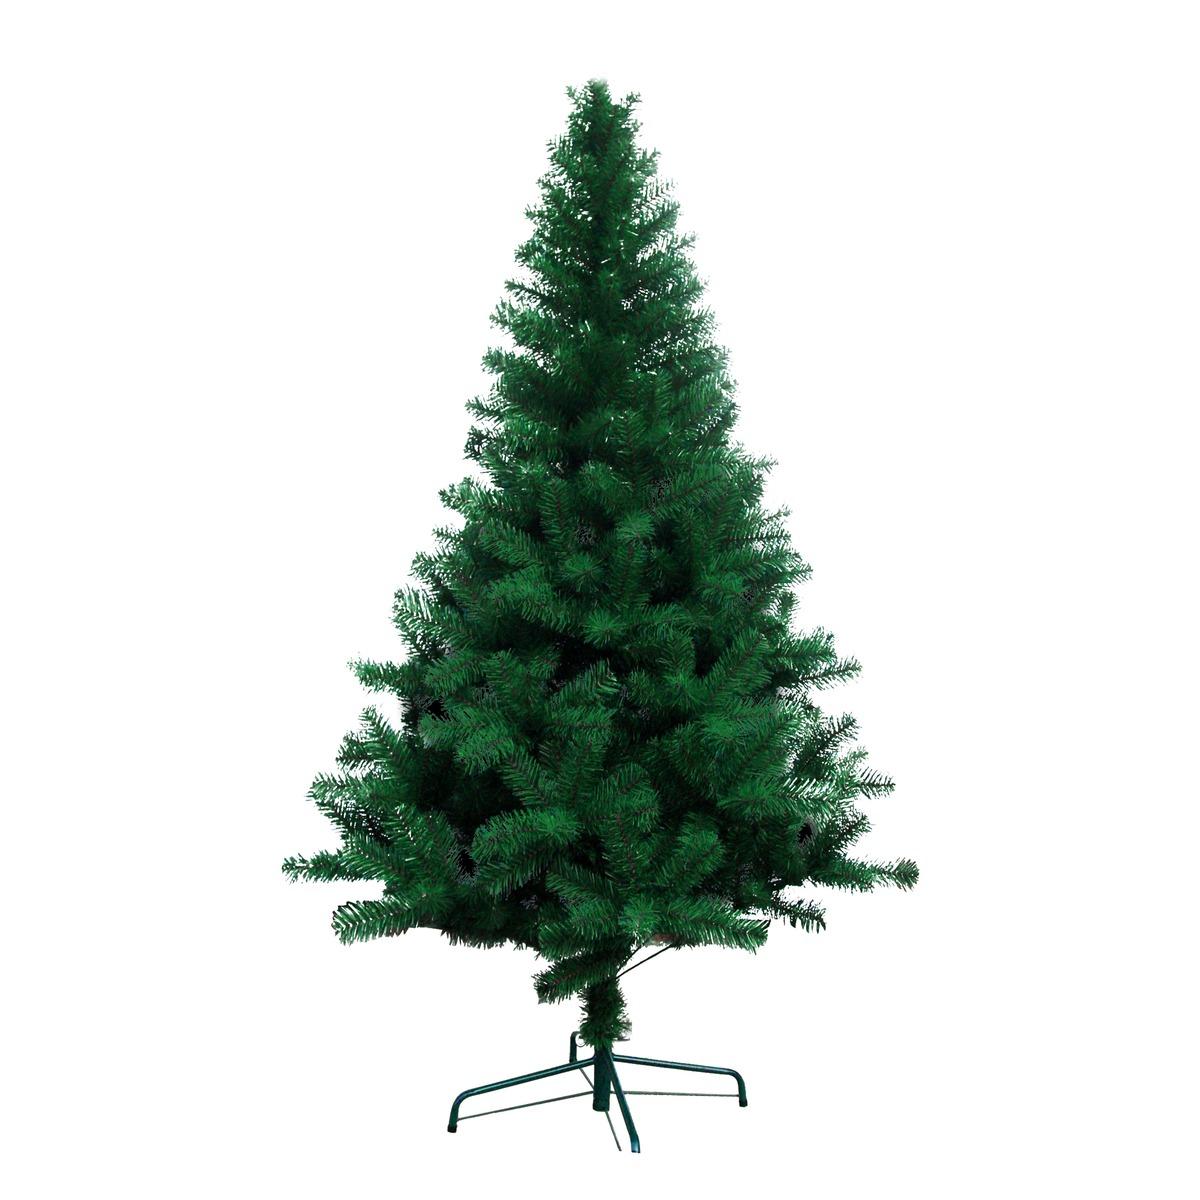 Sapin de Noël en plastique - Hauteur 210 cm - Vert